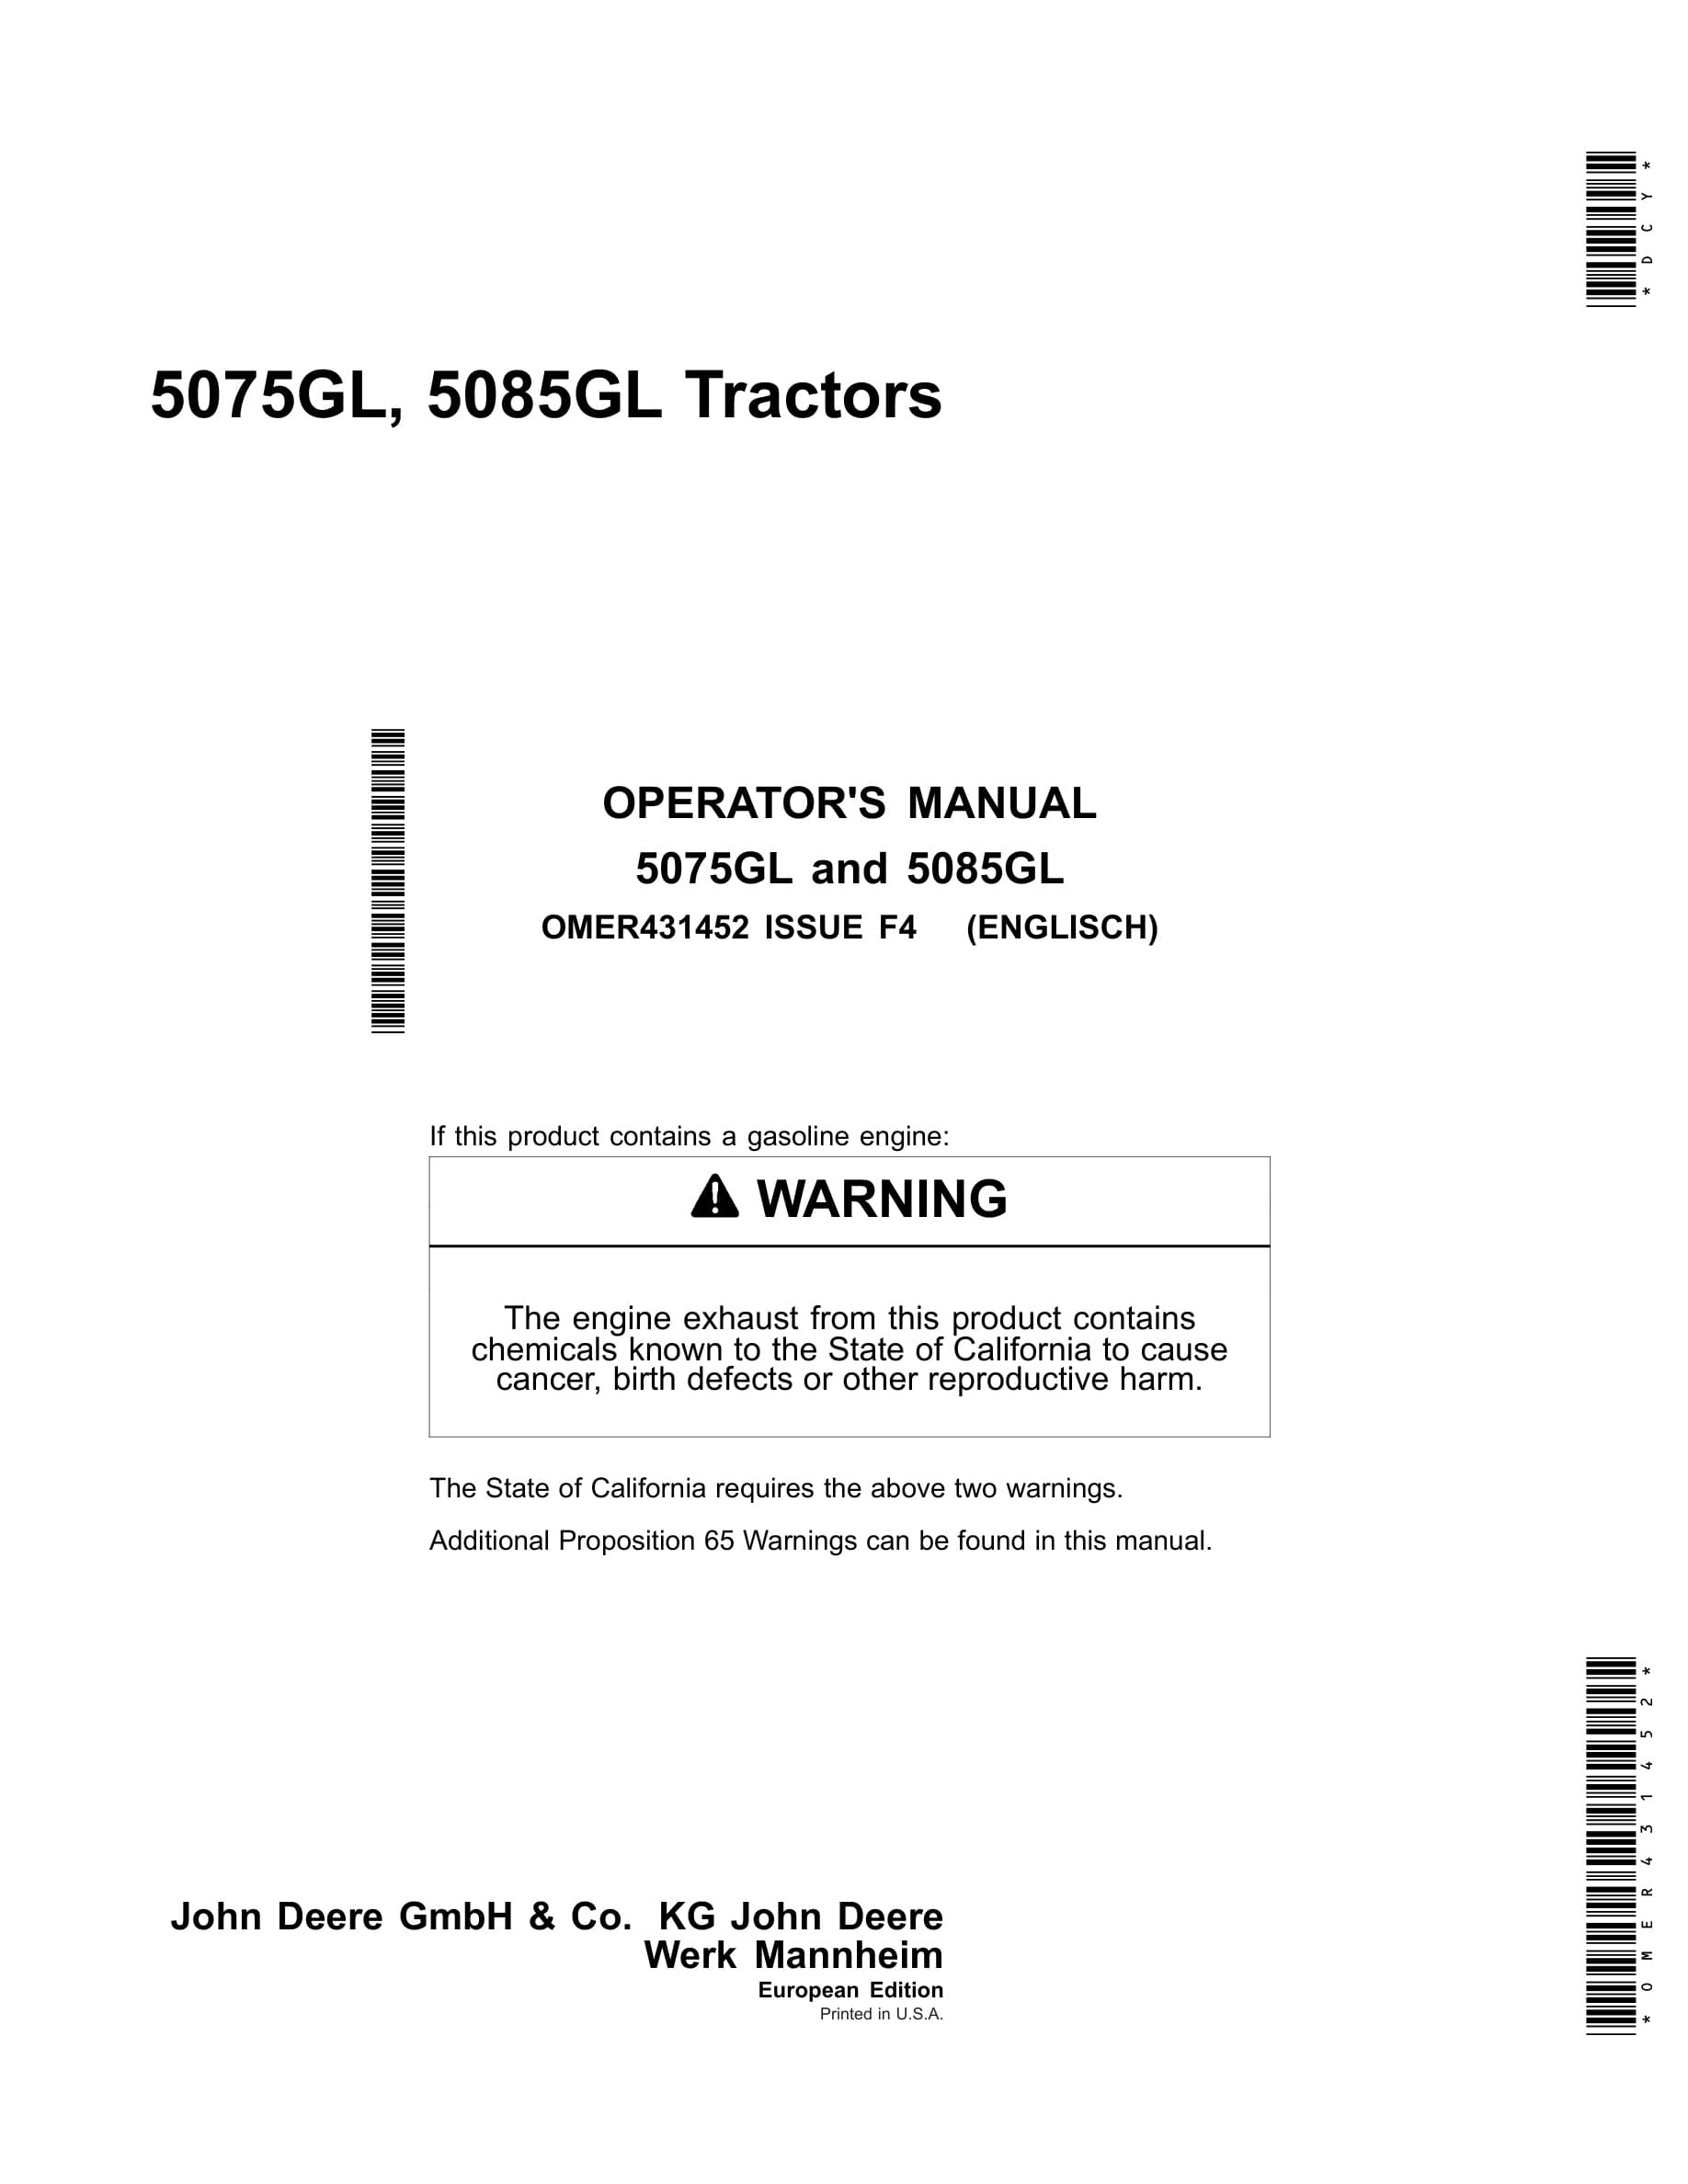 John Deere 5075gl, 5085gl Tractors Operator Manuals OMER431452-1